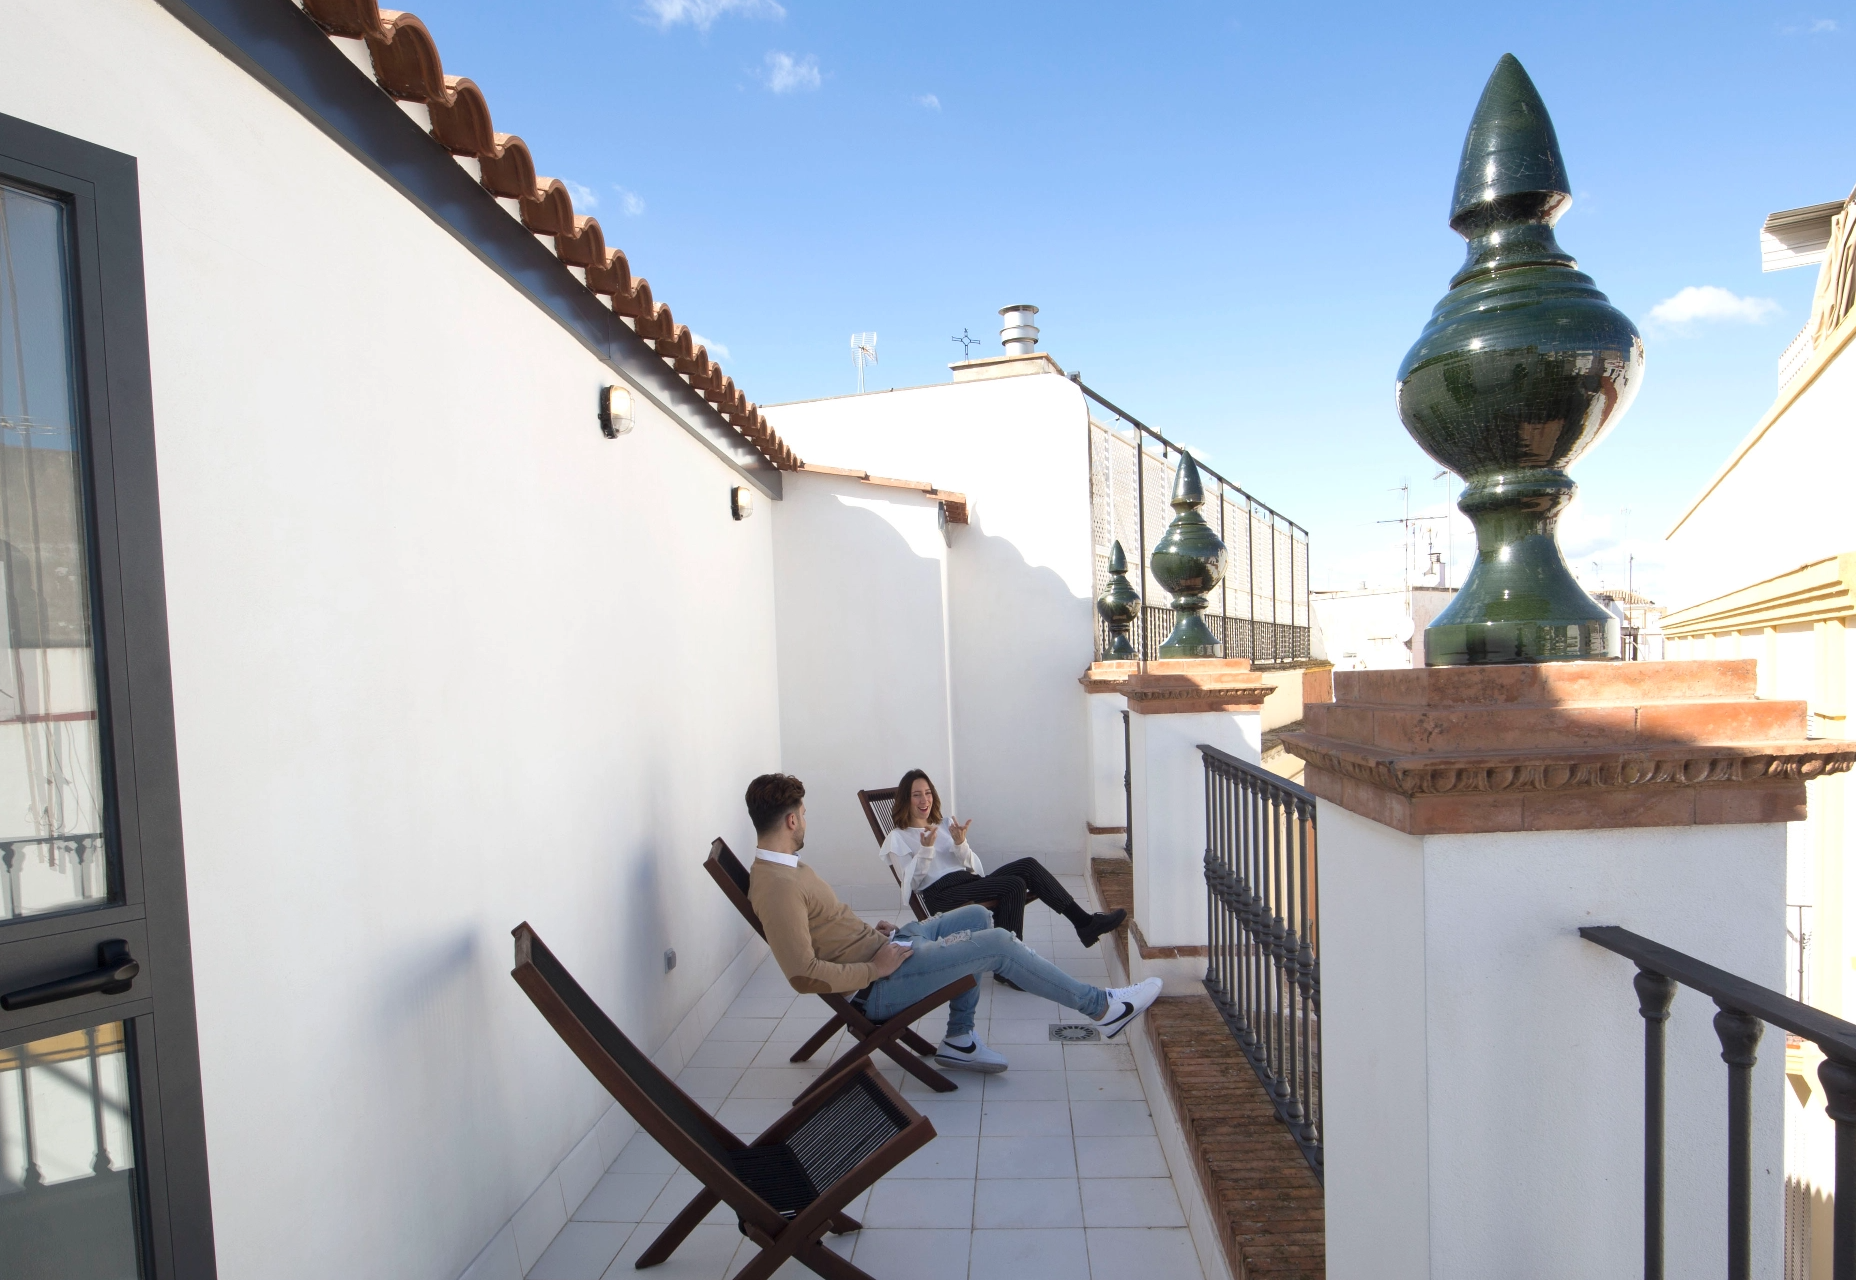 Hotel For You Hostel Sevilla